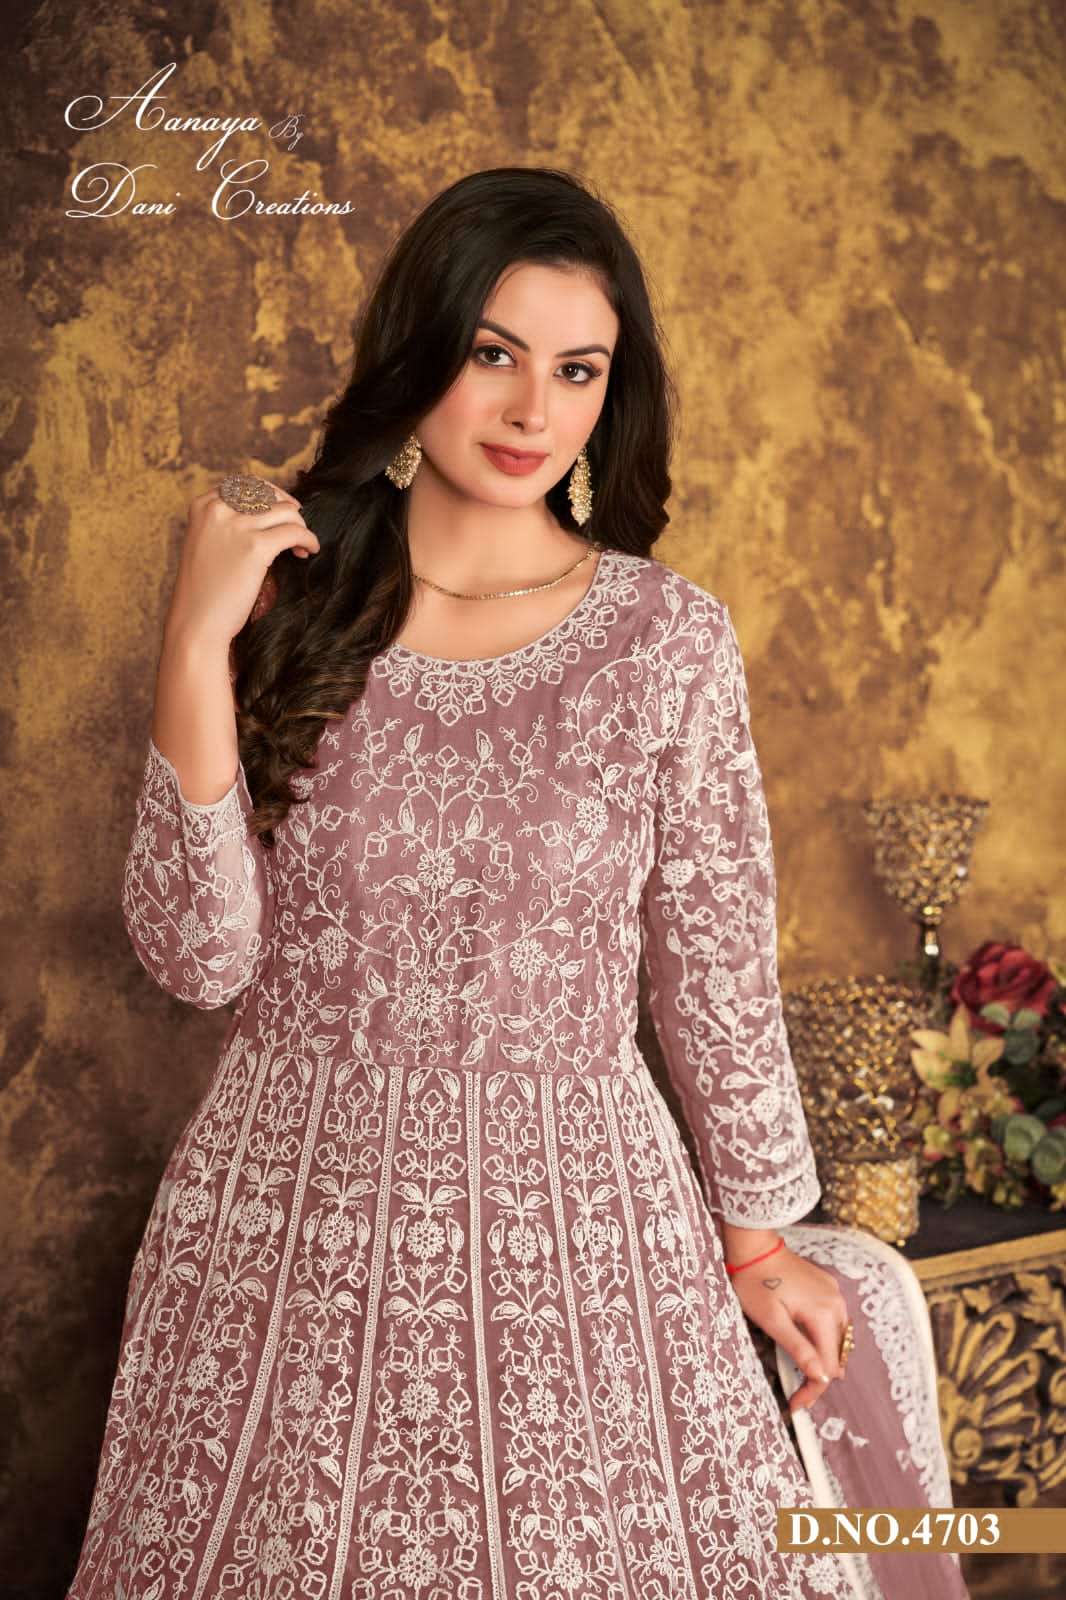 daani creation aanaya vol-147 4700 series net with fancy embroidered work salwar kameez surat